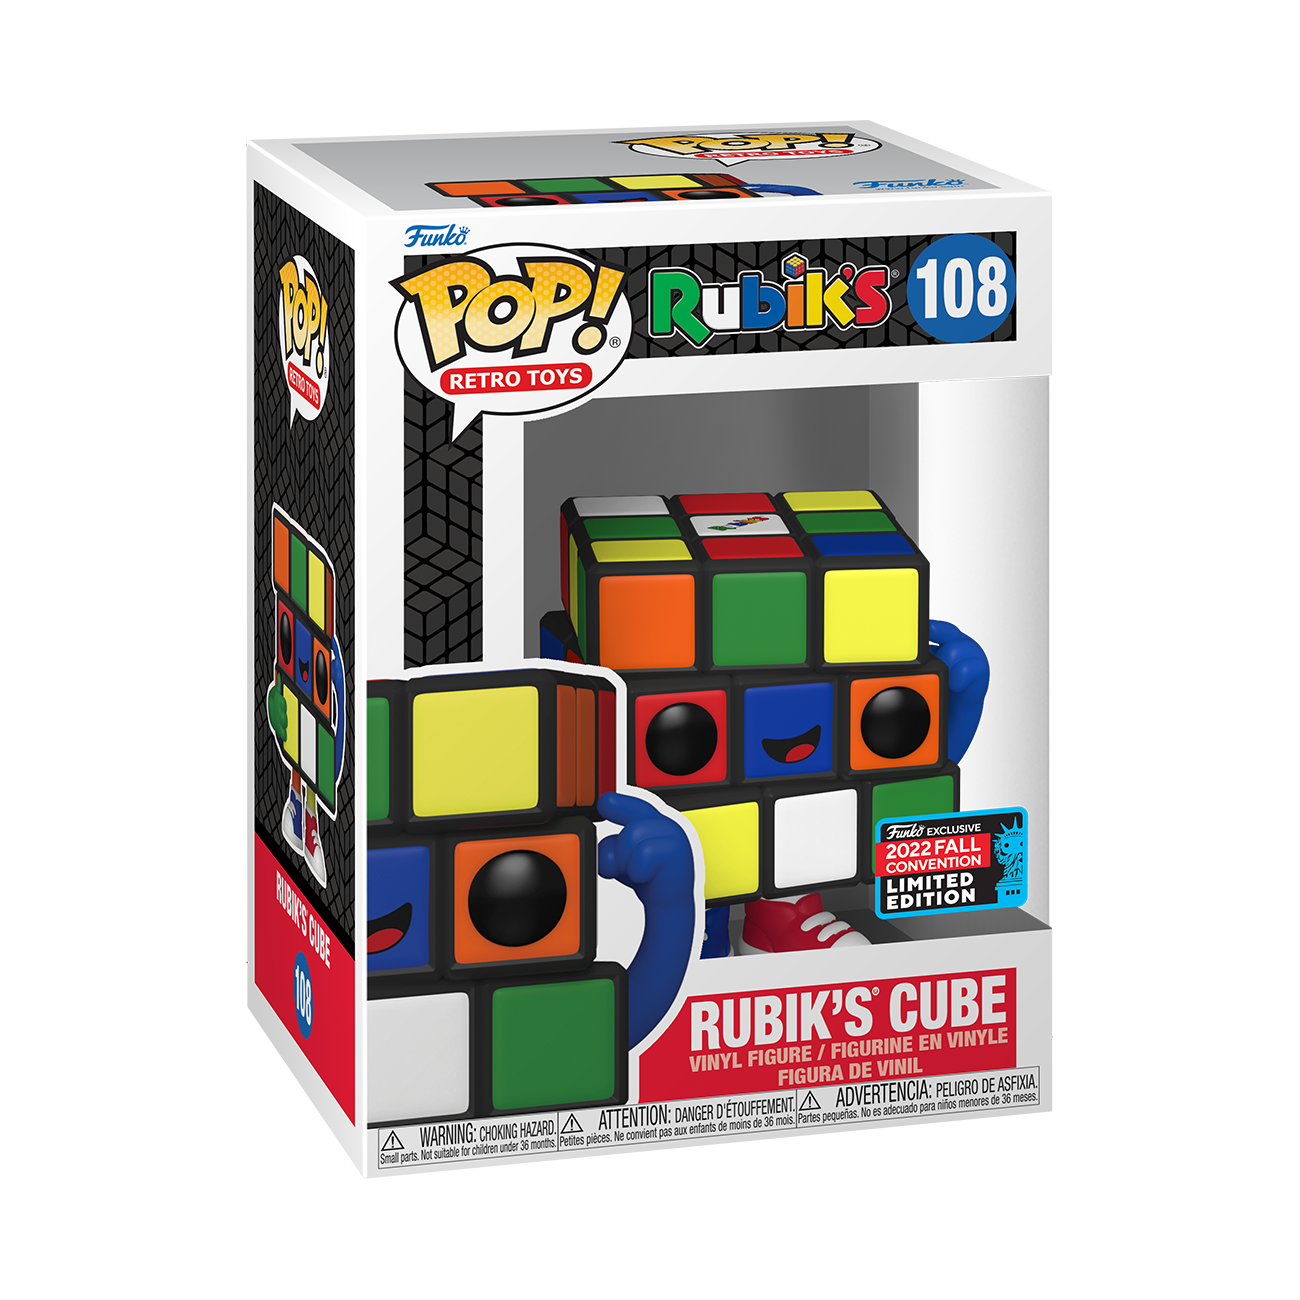 Retro Toys - Rubik’s Cube NYCC 2022 Fall Convention Exclusive Pop! Vinyl